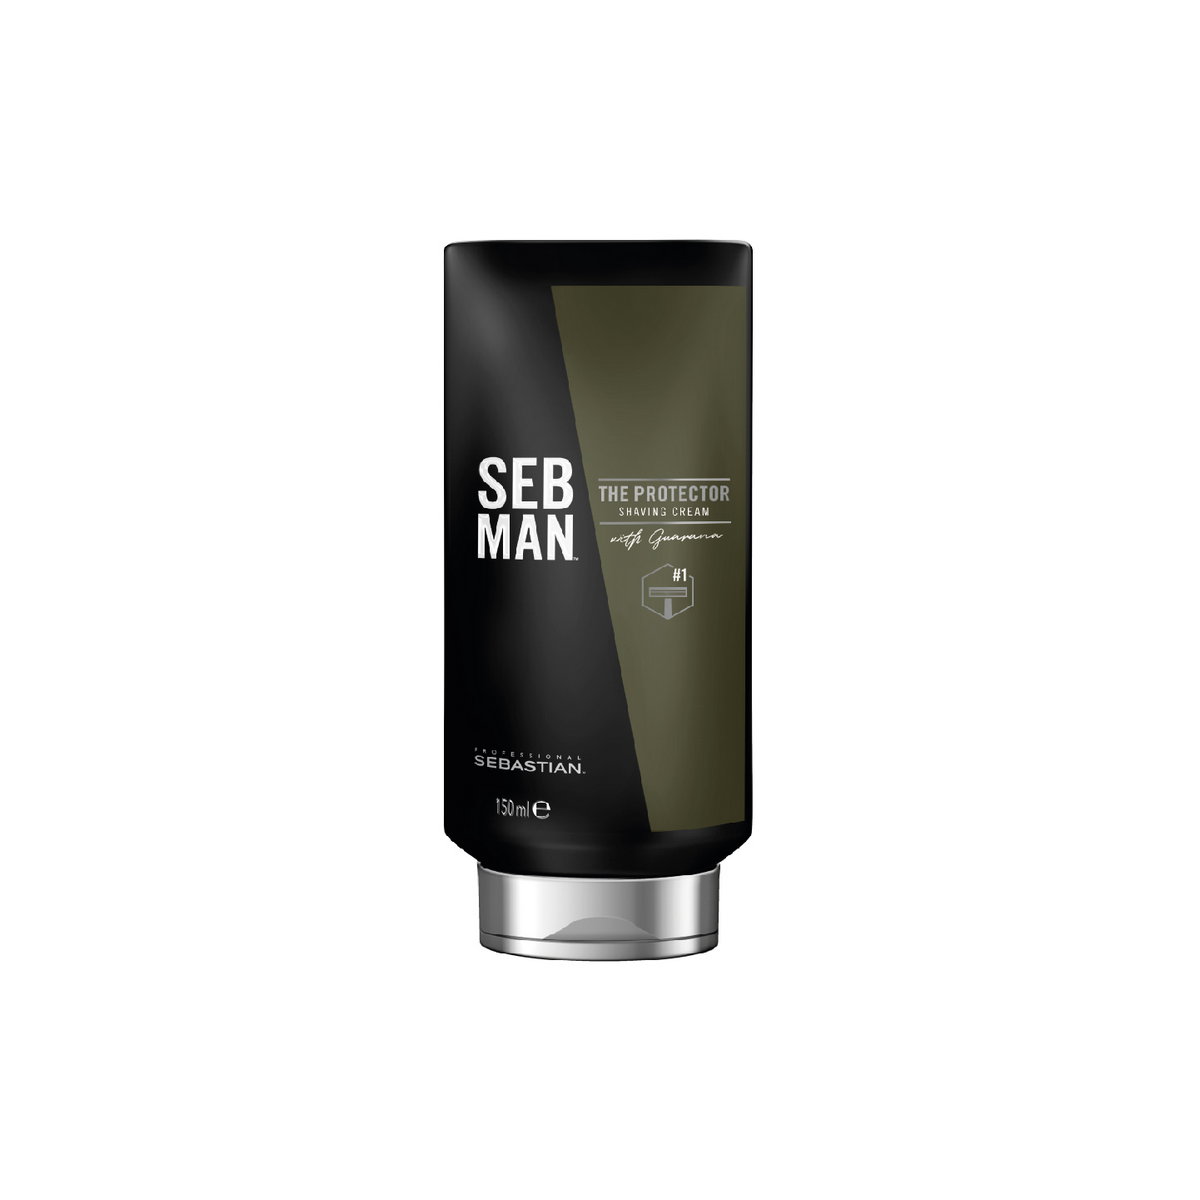 Seb Man The Protector Creme Barba Embalagem